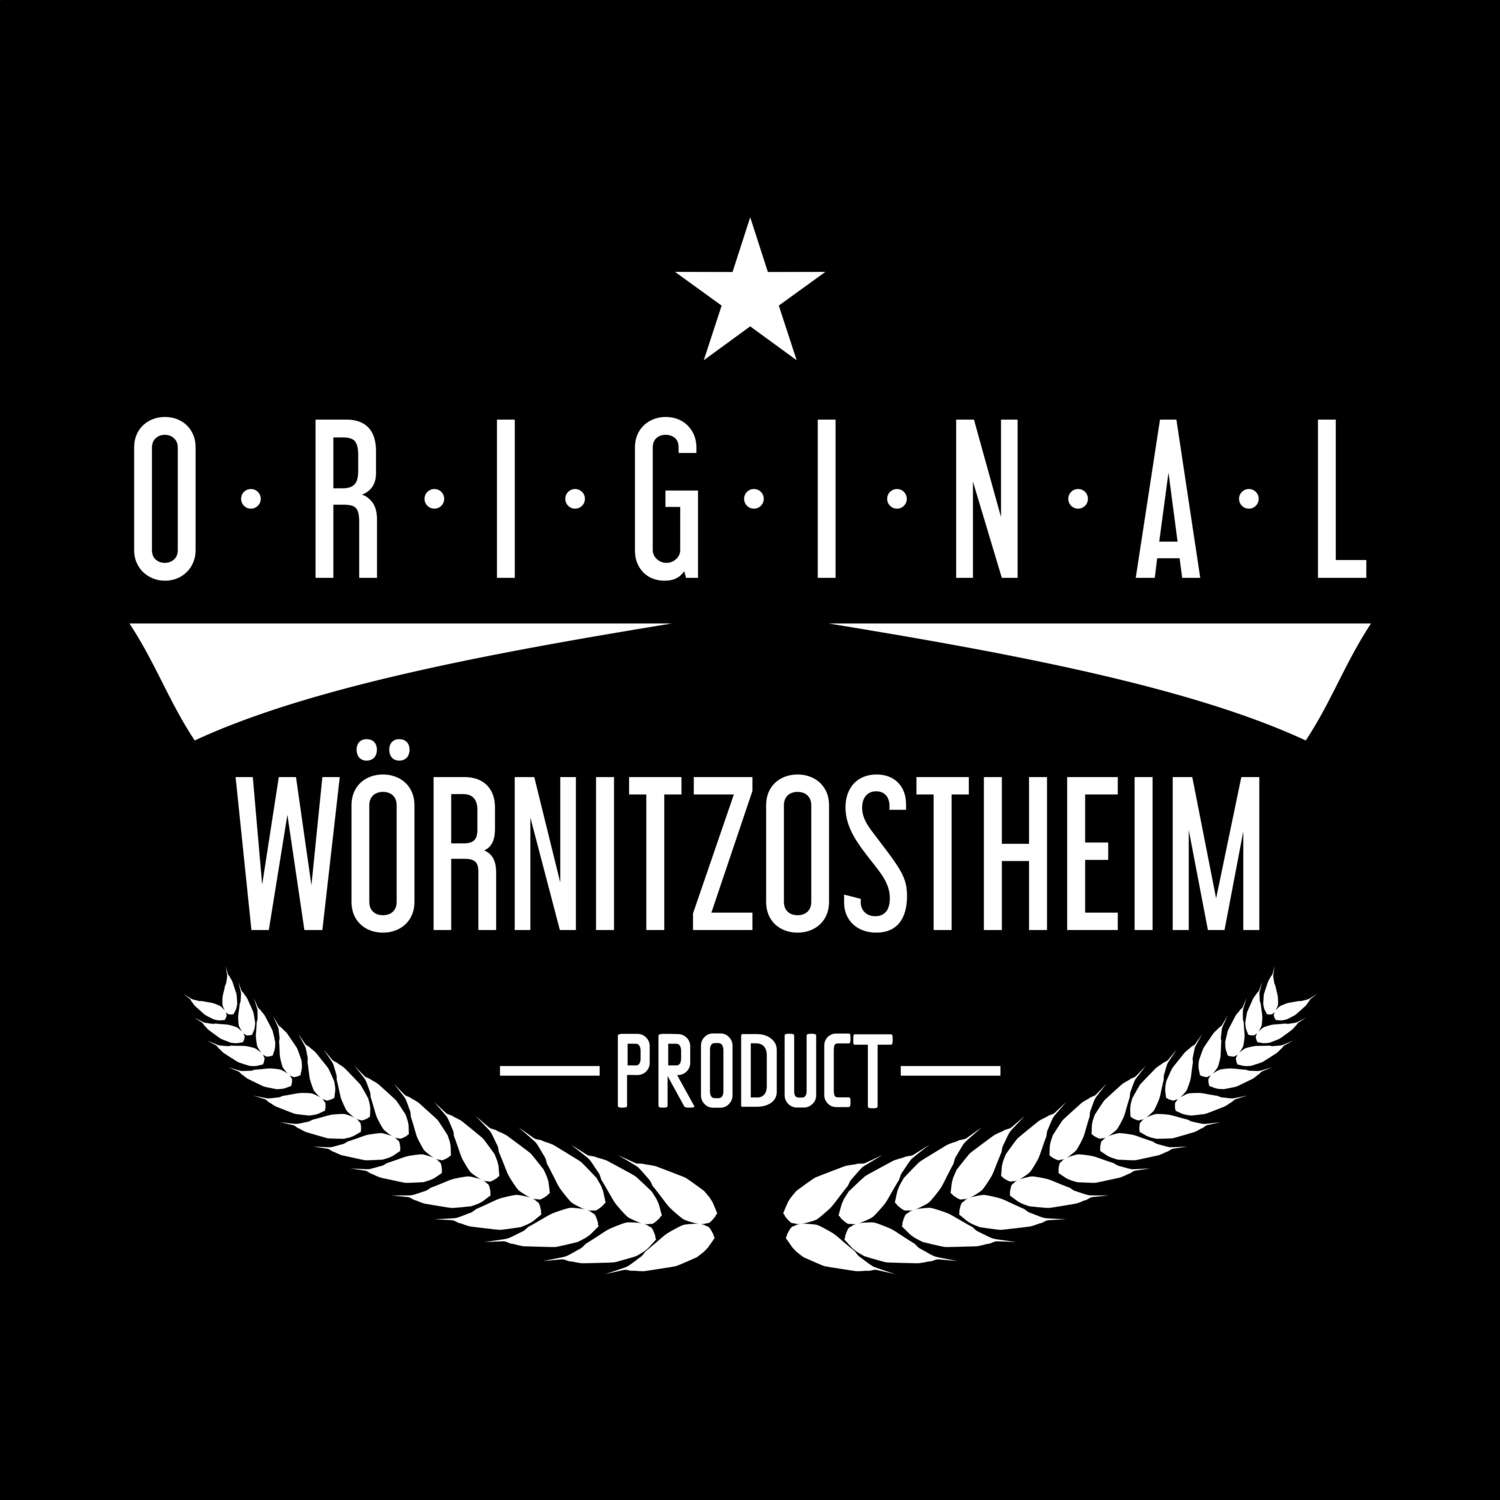 Wörnitzostheim T-Shirt »Original Product«